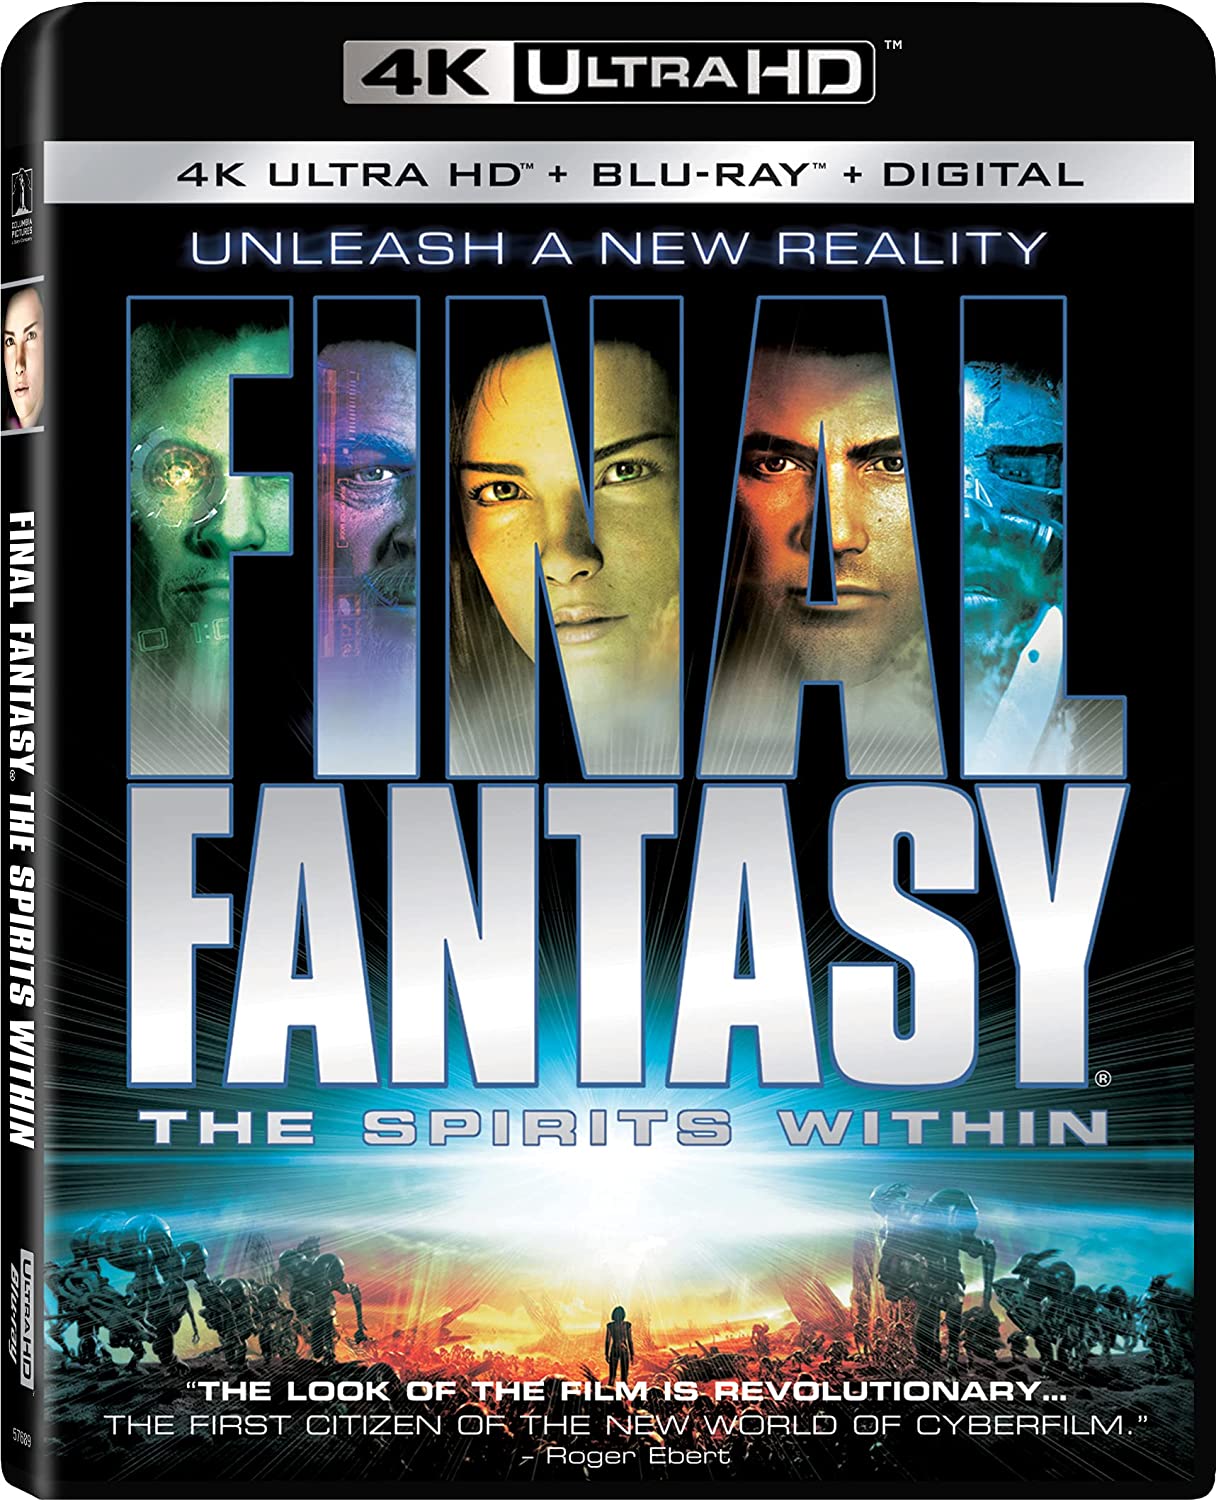 Stiahni si UHD Filmy Final Fantasy: Esence zivota/Final Fantasy: The Spirits Within(2001)(CZ/EN/GER/HUN)(4K Ultra HD)[HEVC 2160p BDRip HDR10] = CSFD 67%